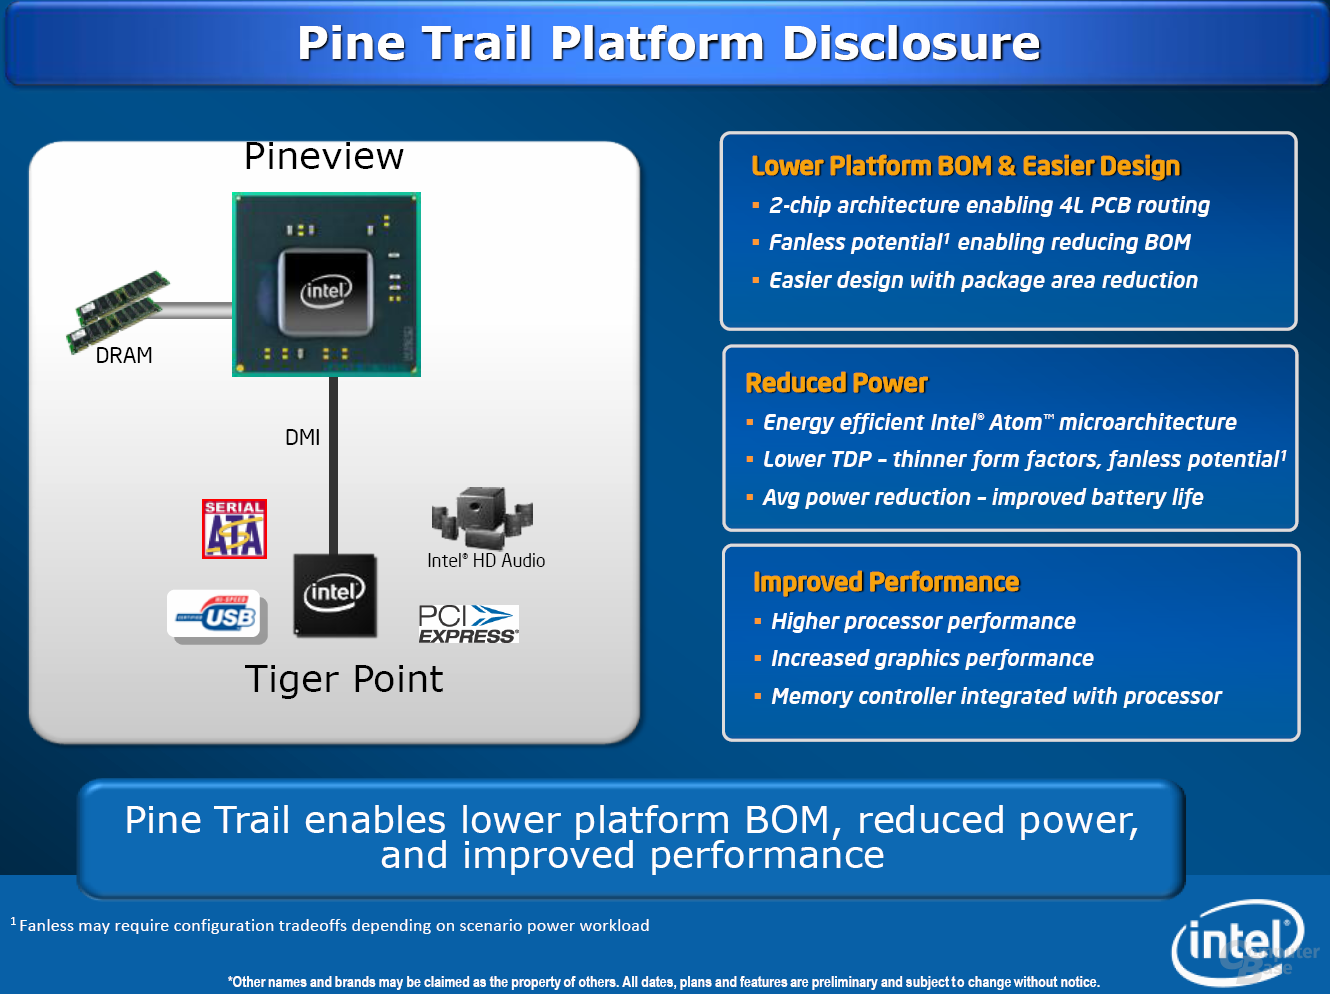 Pine Trail Platform 2